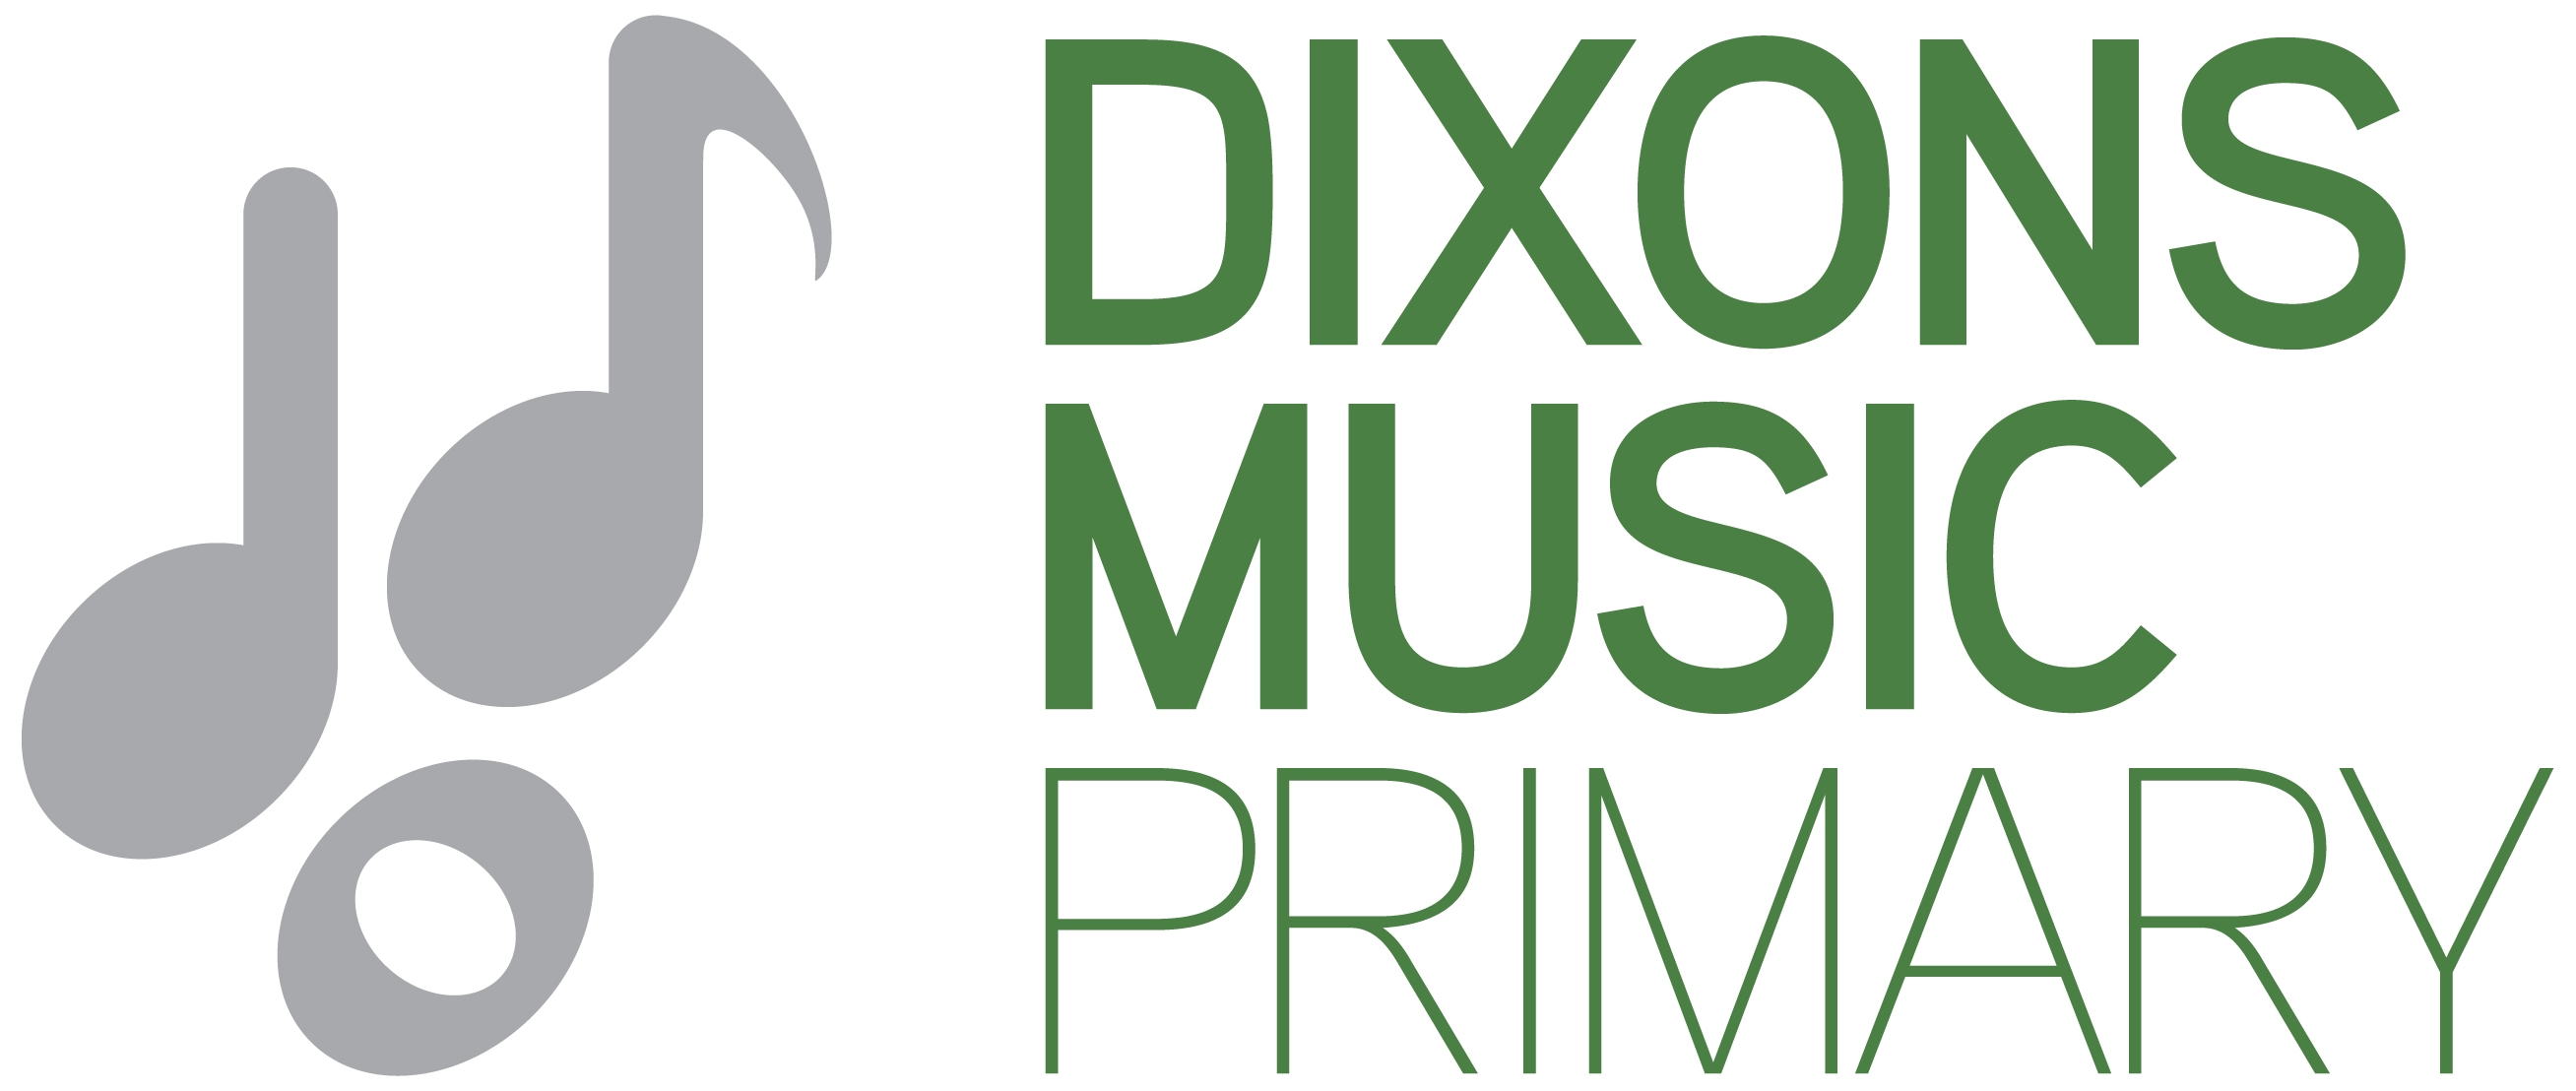 Dixons Music Primary logo